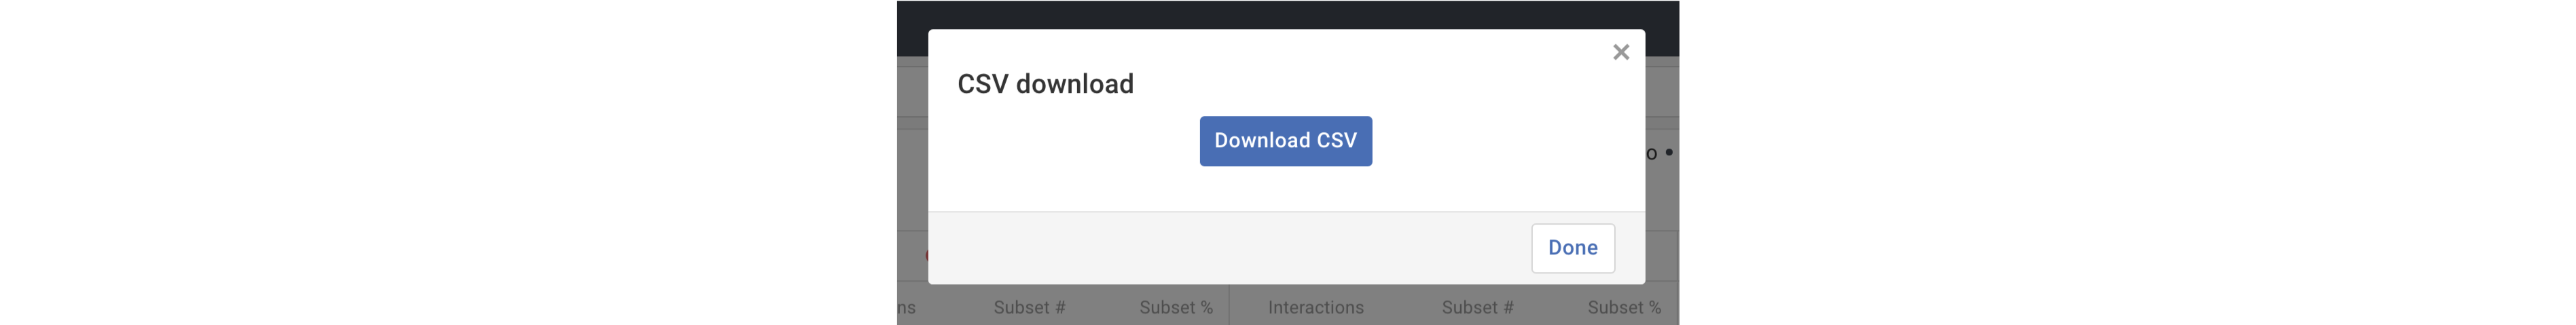 CSV_download_modal.png